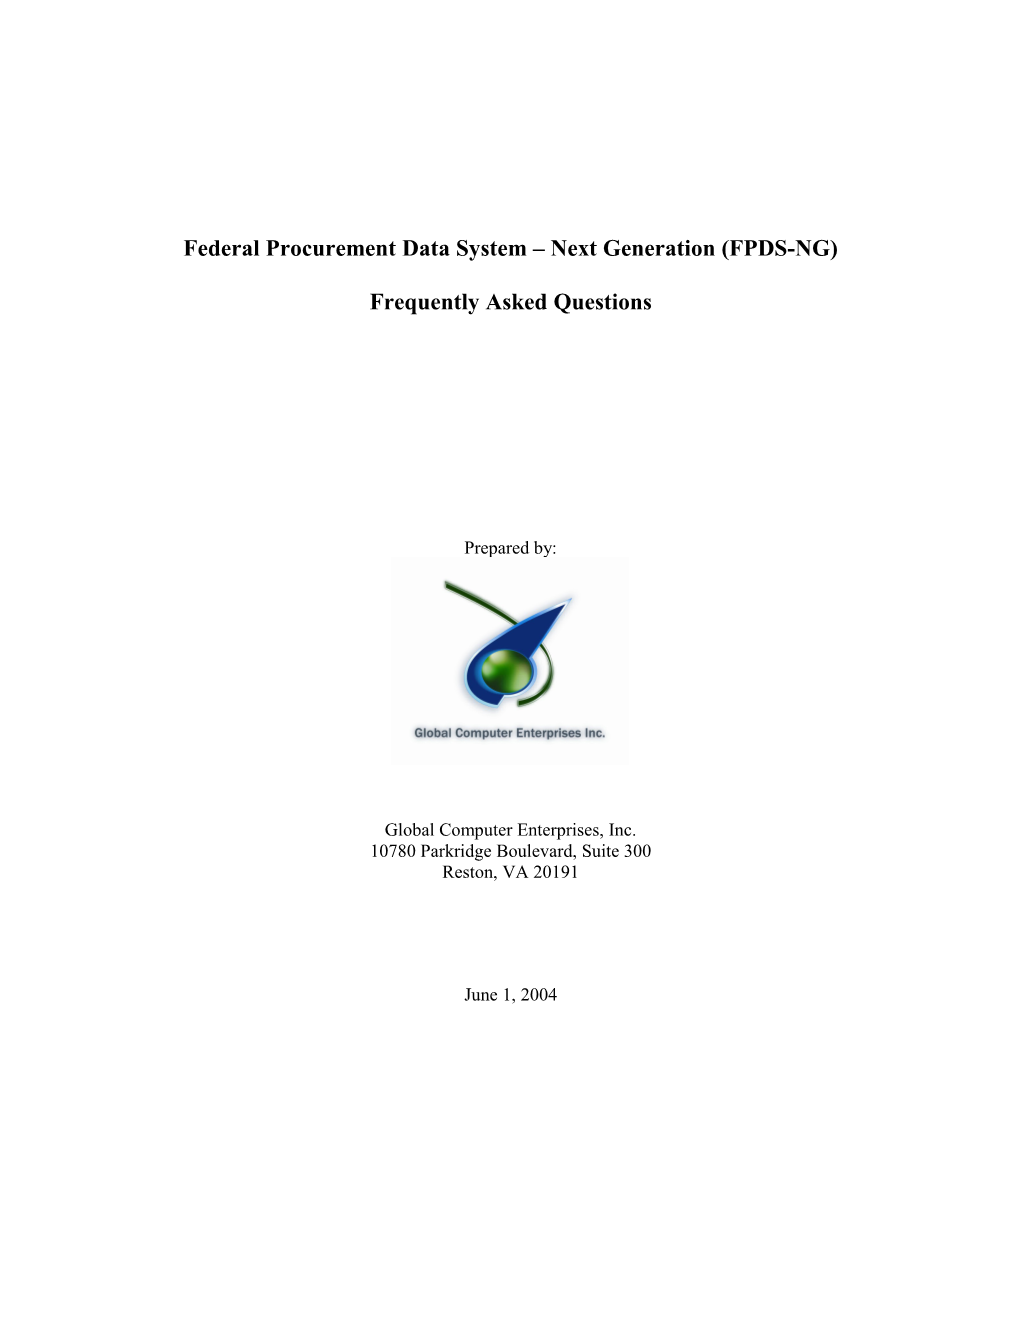 FPDS-NG Contingency Plan